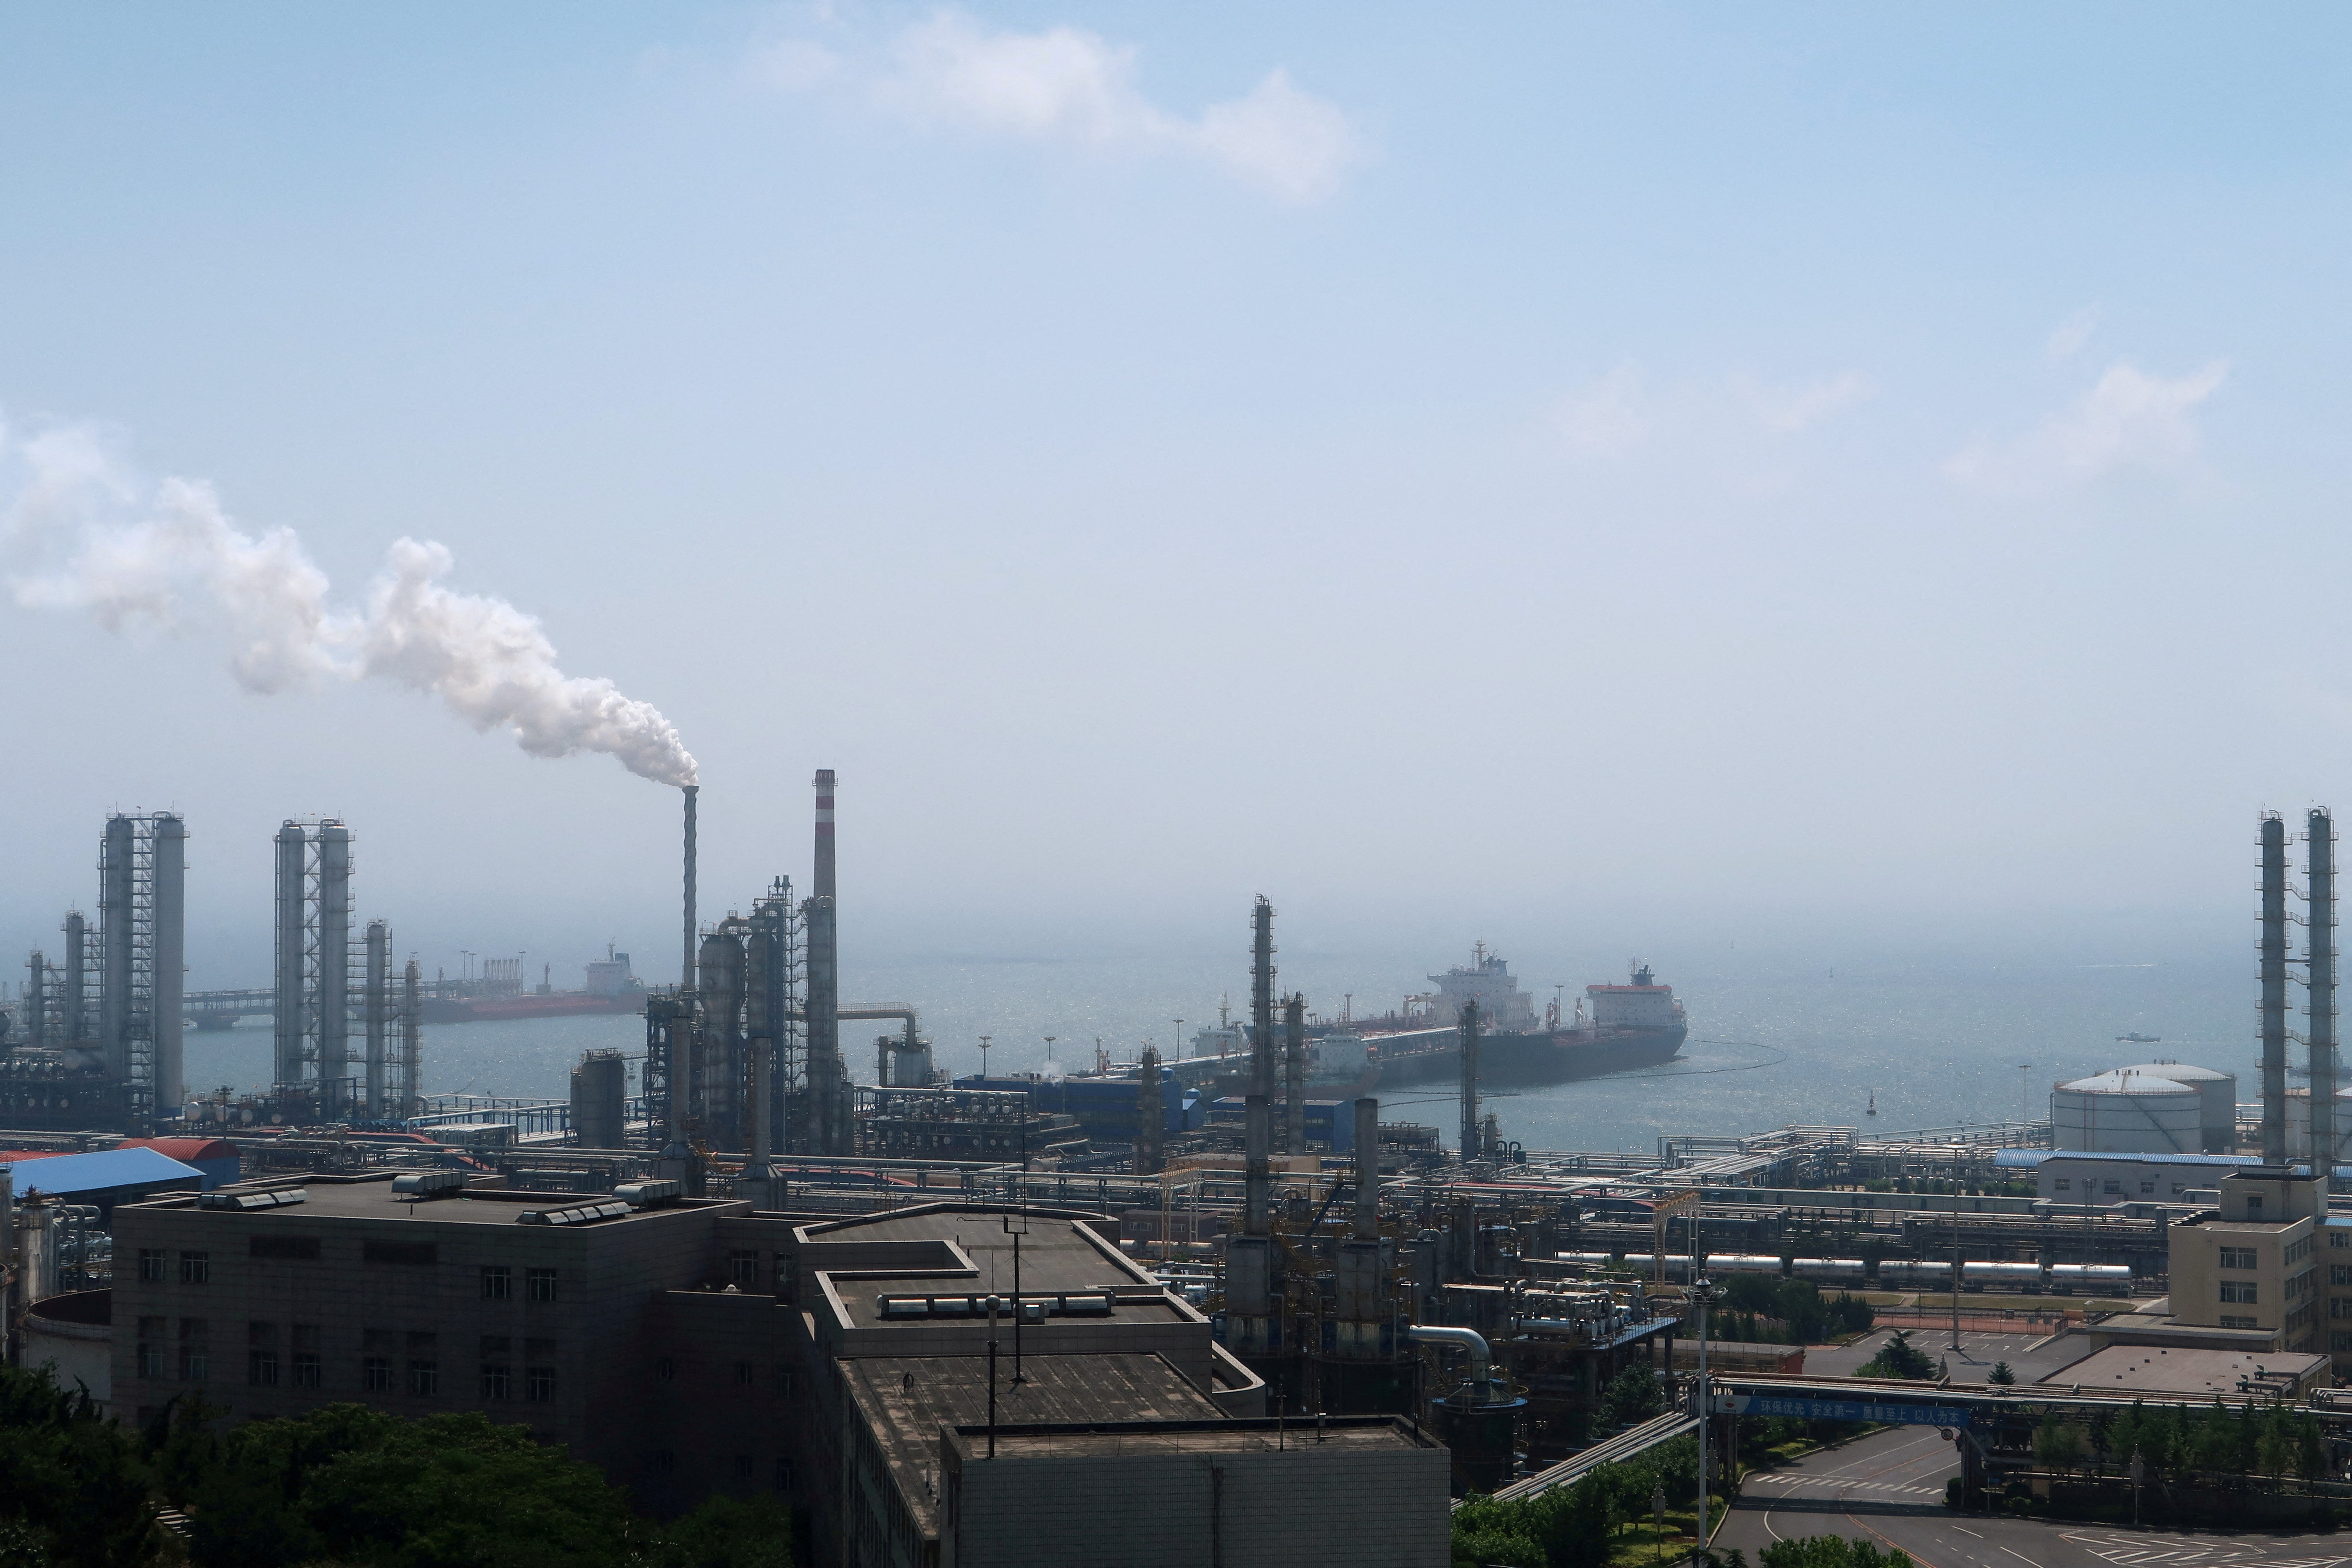 China National Petroleum Corporation's Dalian Petrochemical Corp refinery is seen near the downtown of Dalian